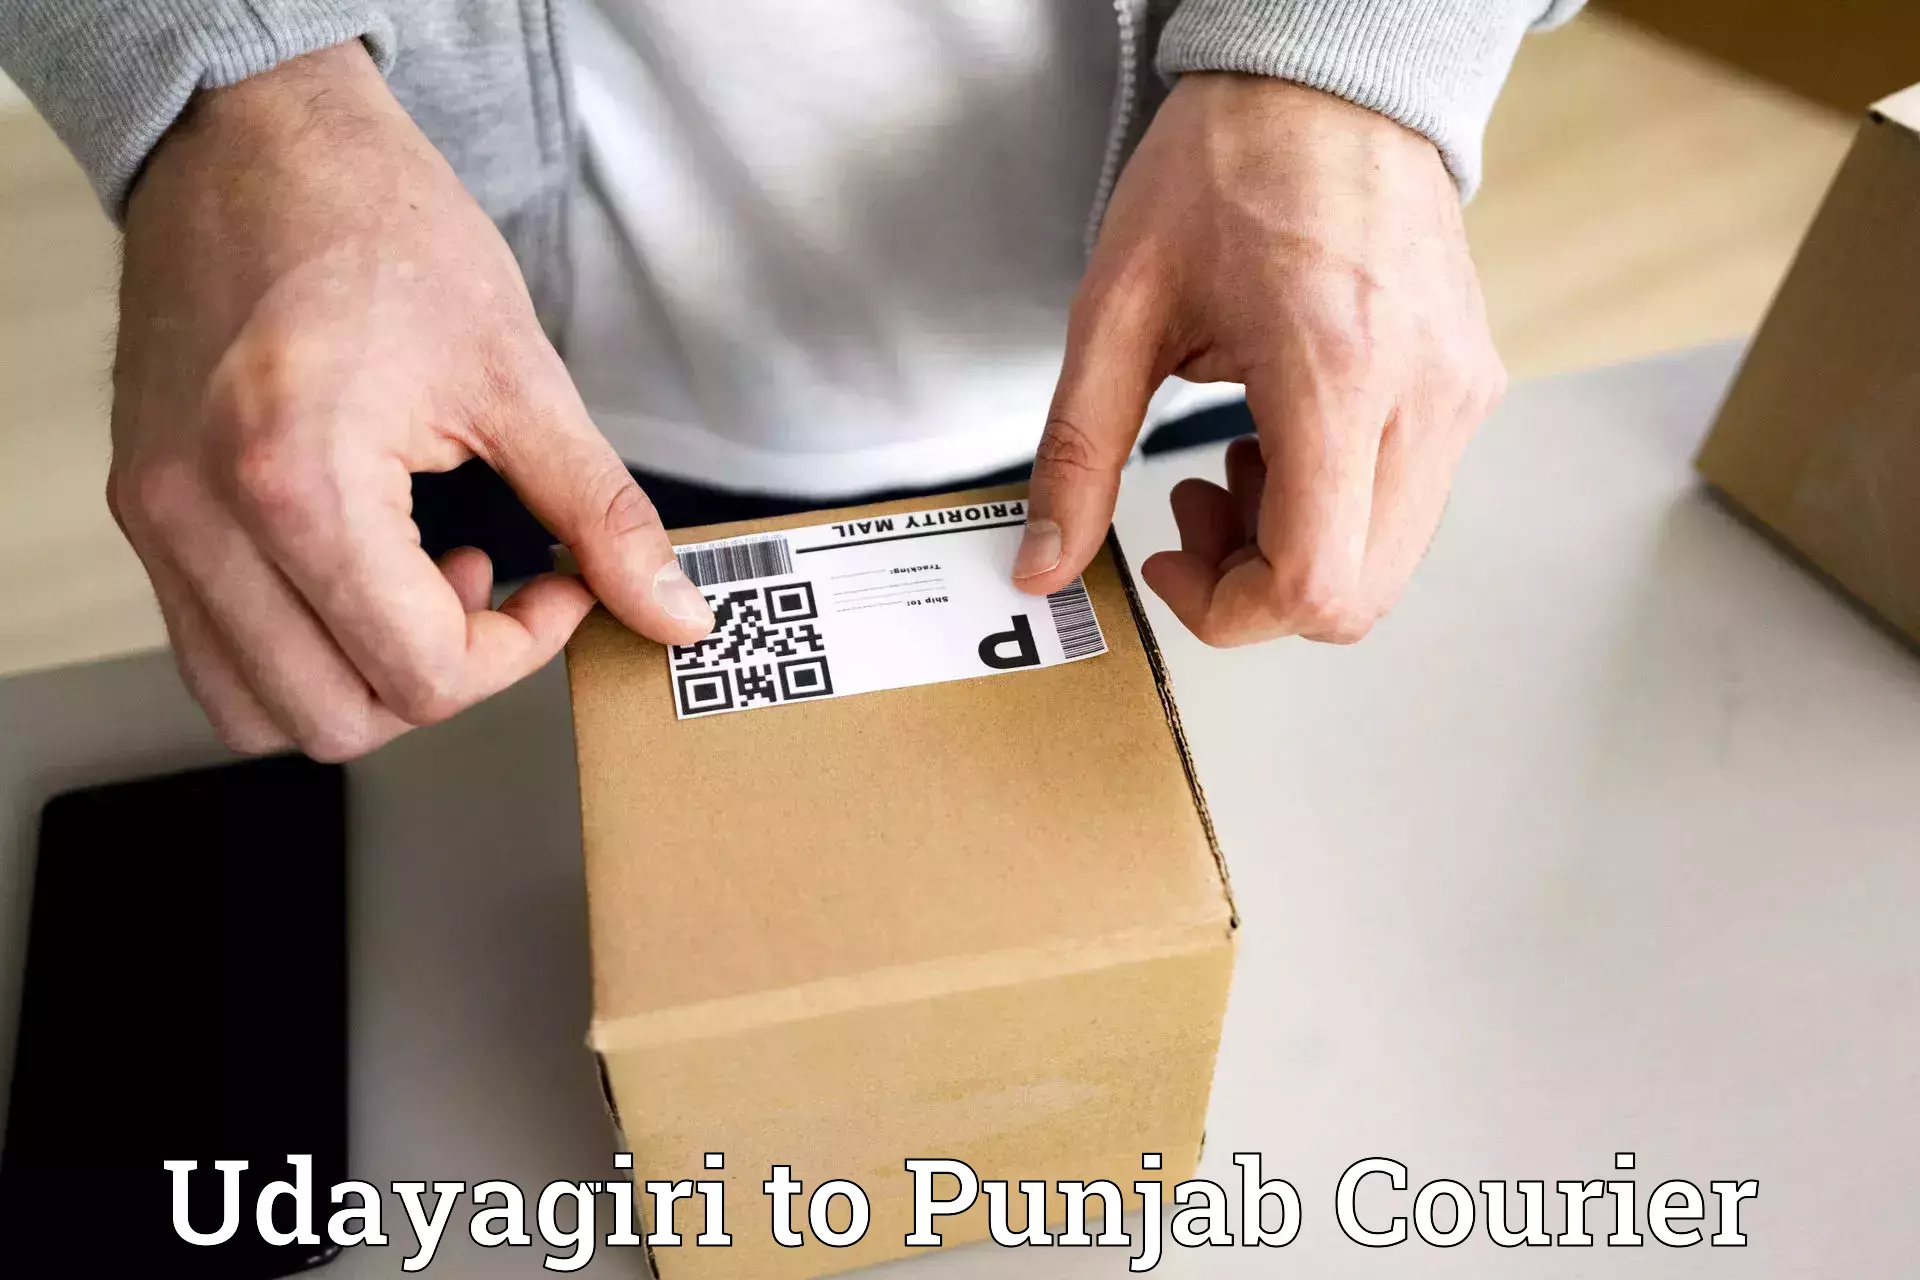 Supply chain delivery Udayagiri to Amritsar